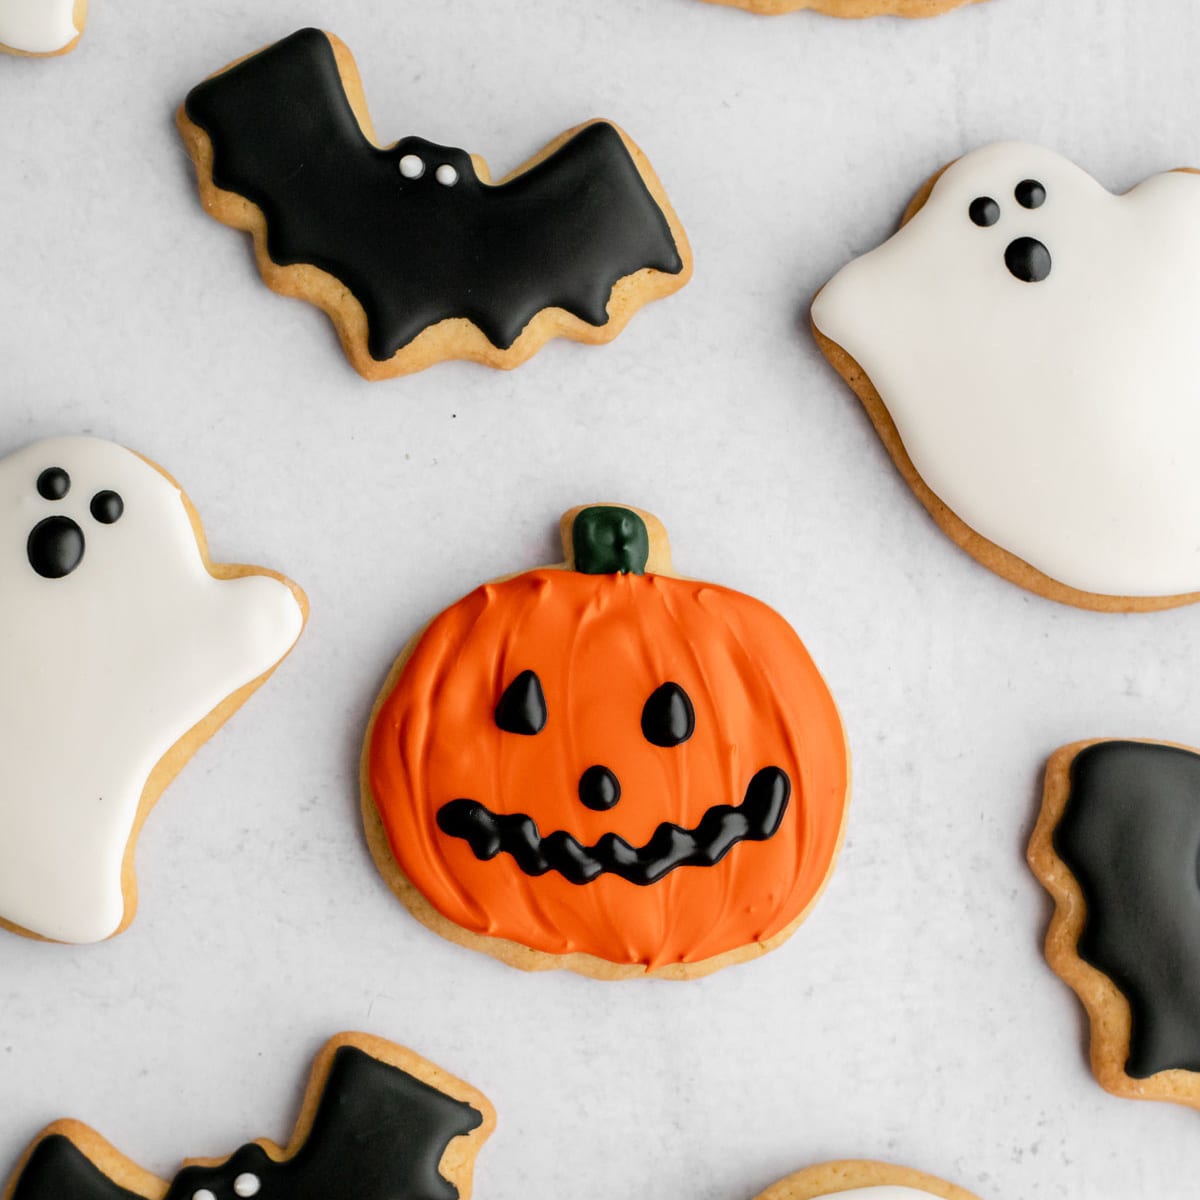 https://thebakersalmanac.com/wp-content/uploads/2021/10/Halloween-sugar-cookies-recipe-image.jpg